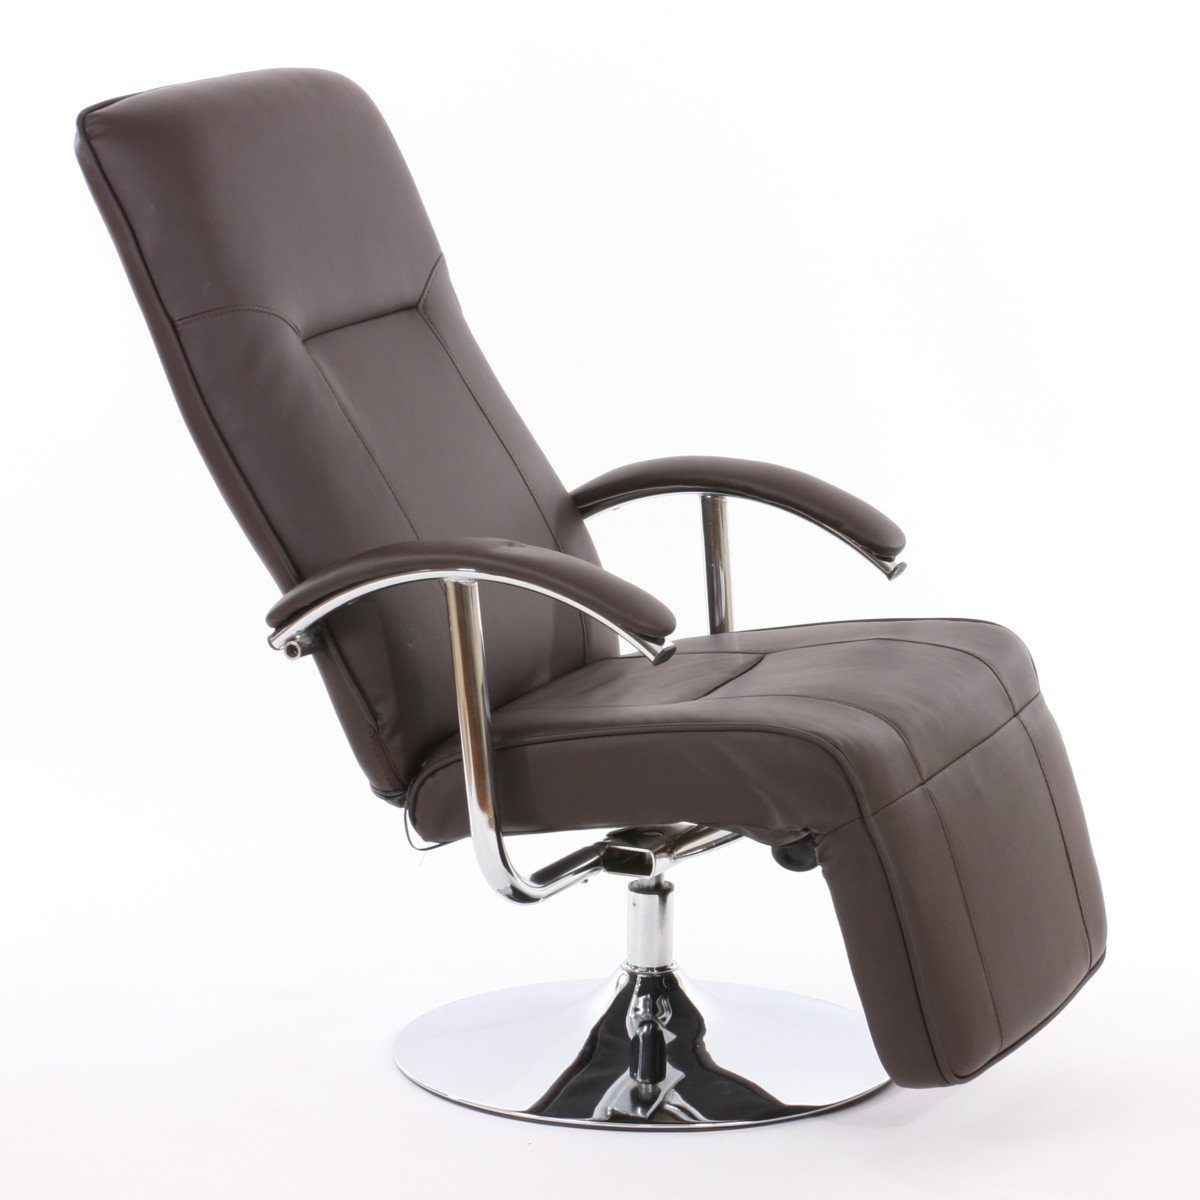 Fauteuil relax chaise longue Apia II rotatif simili cuir metal chrome